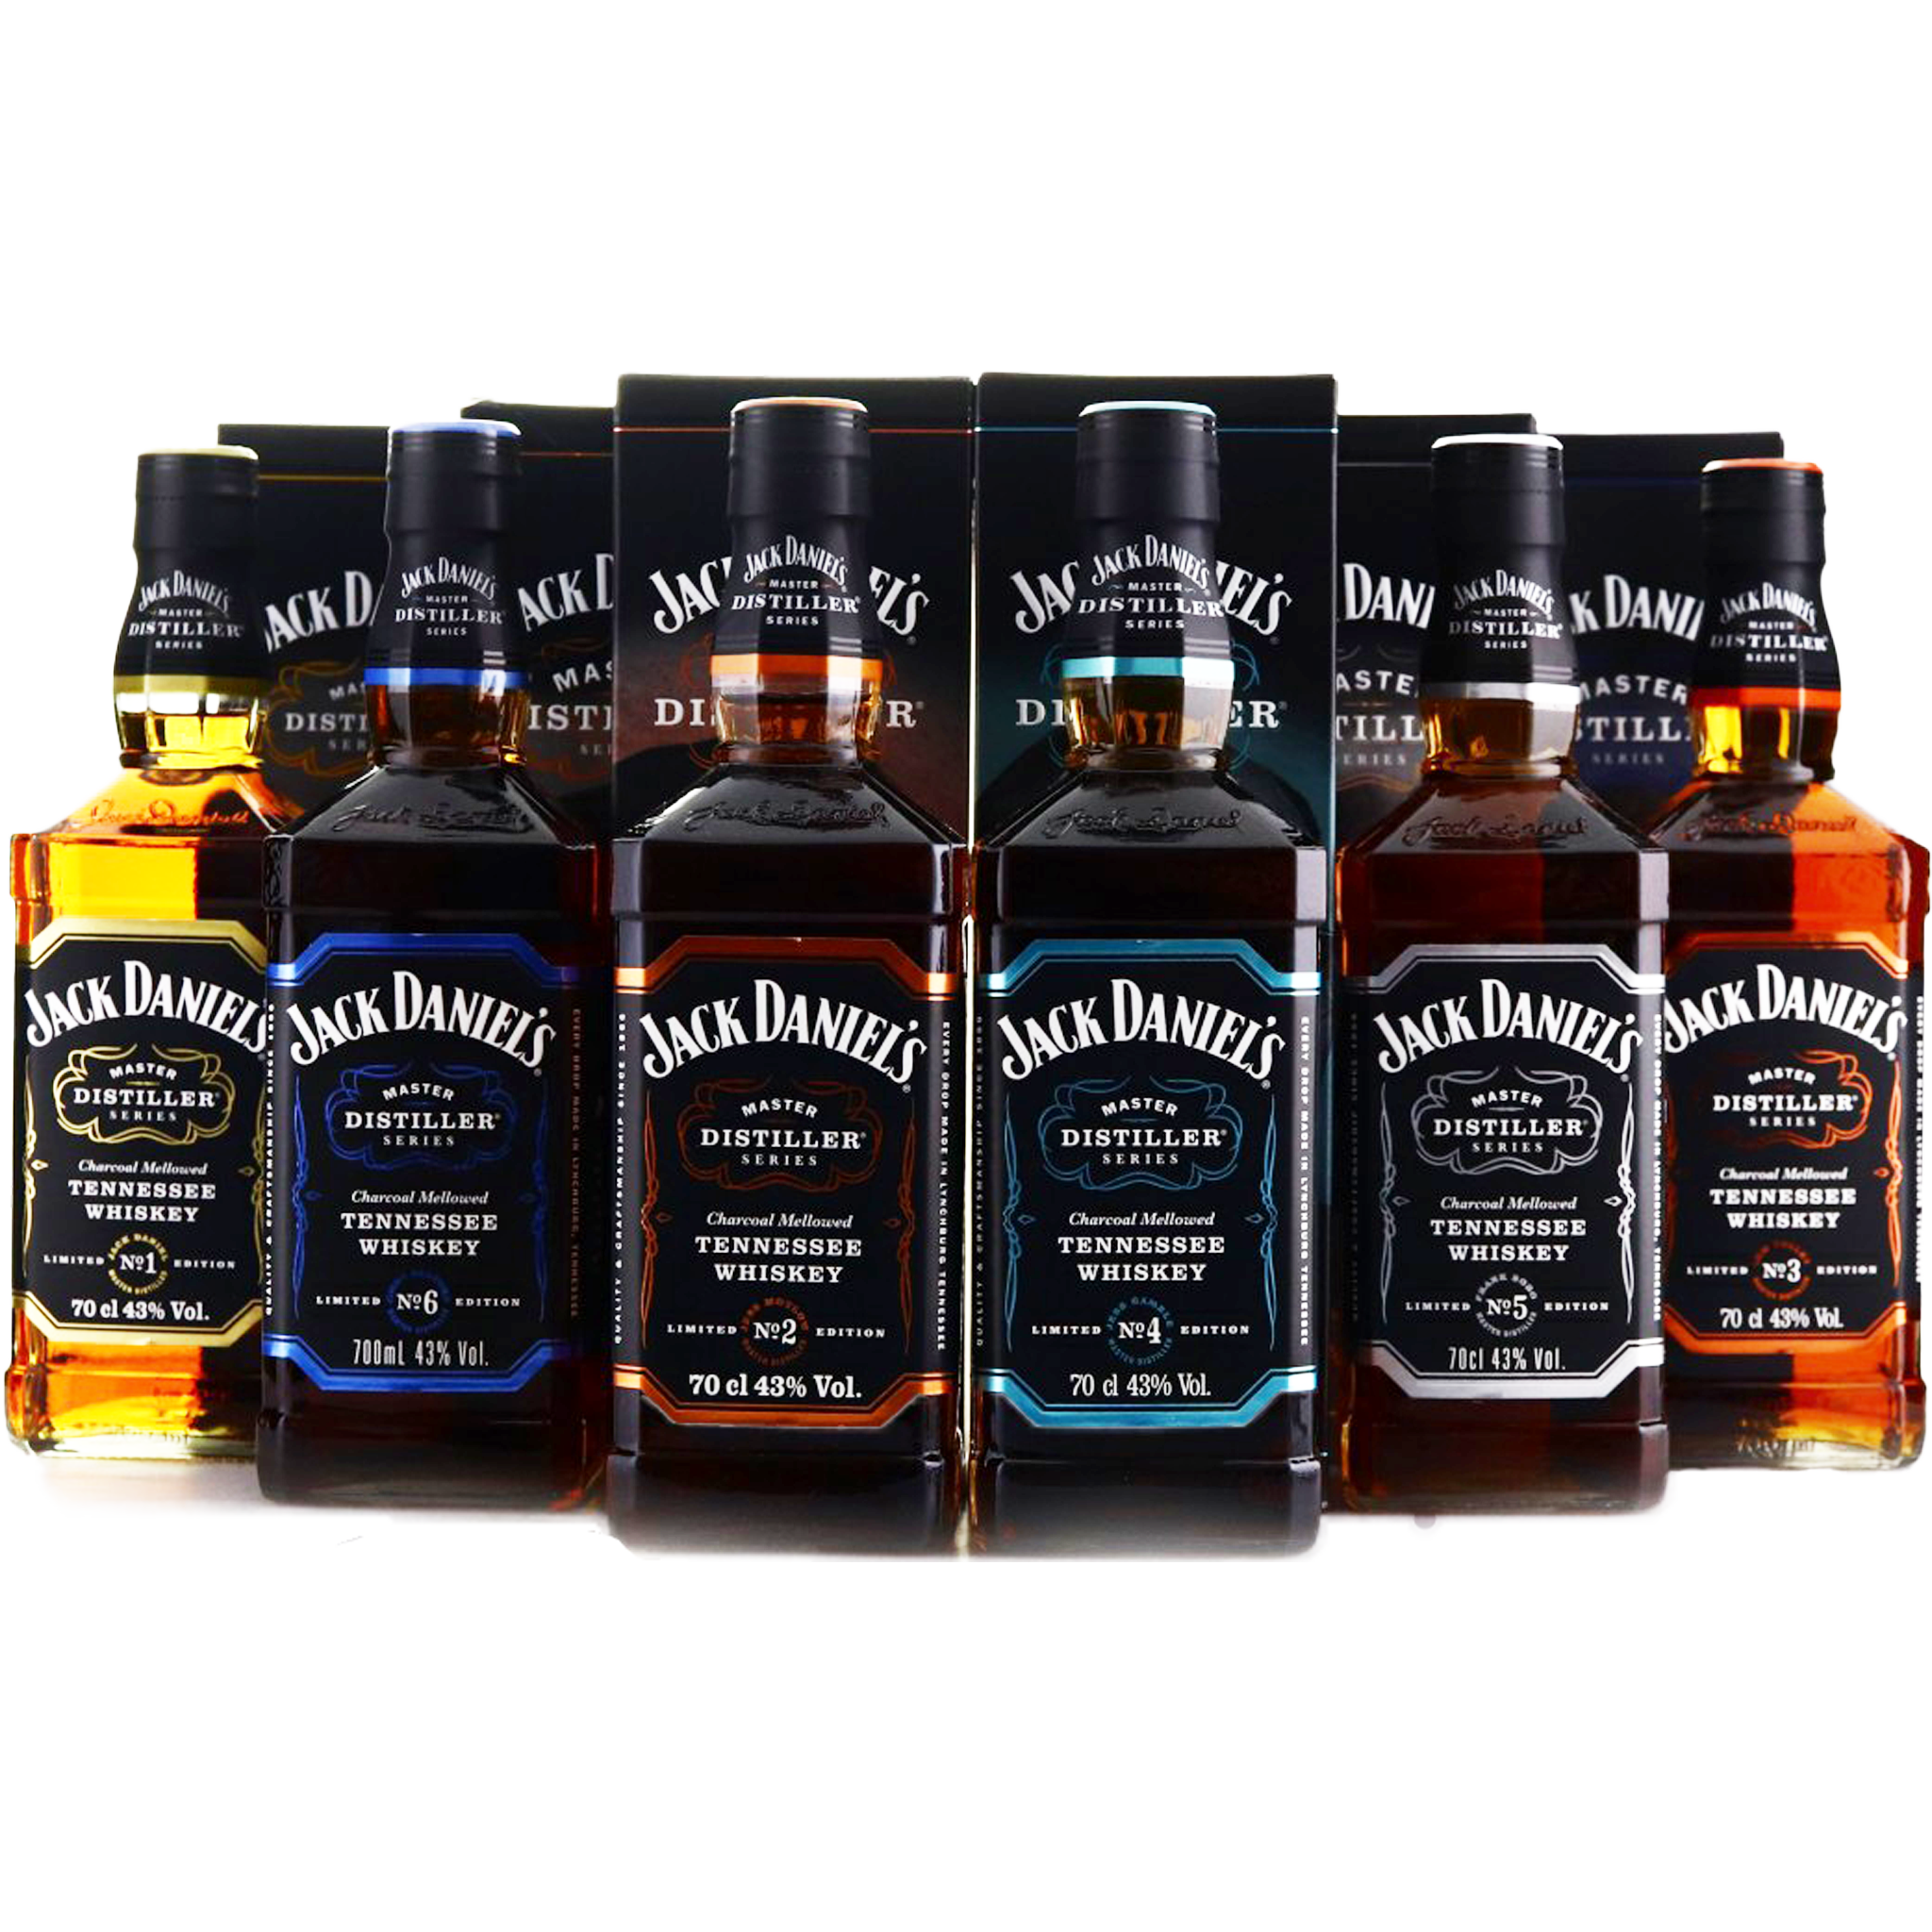 Jack Daniel's Master Distiller Limited 1 to 6 all series